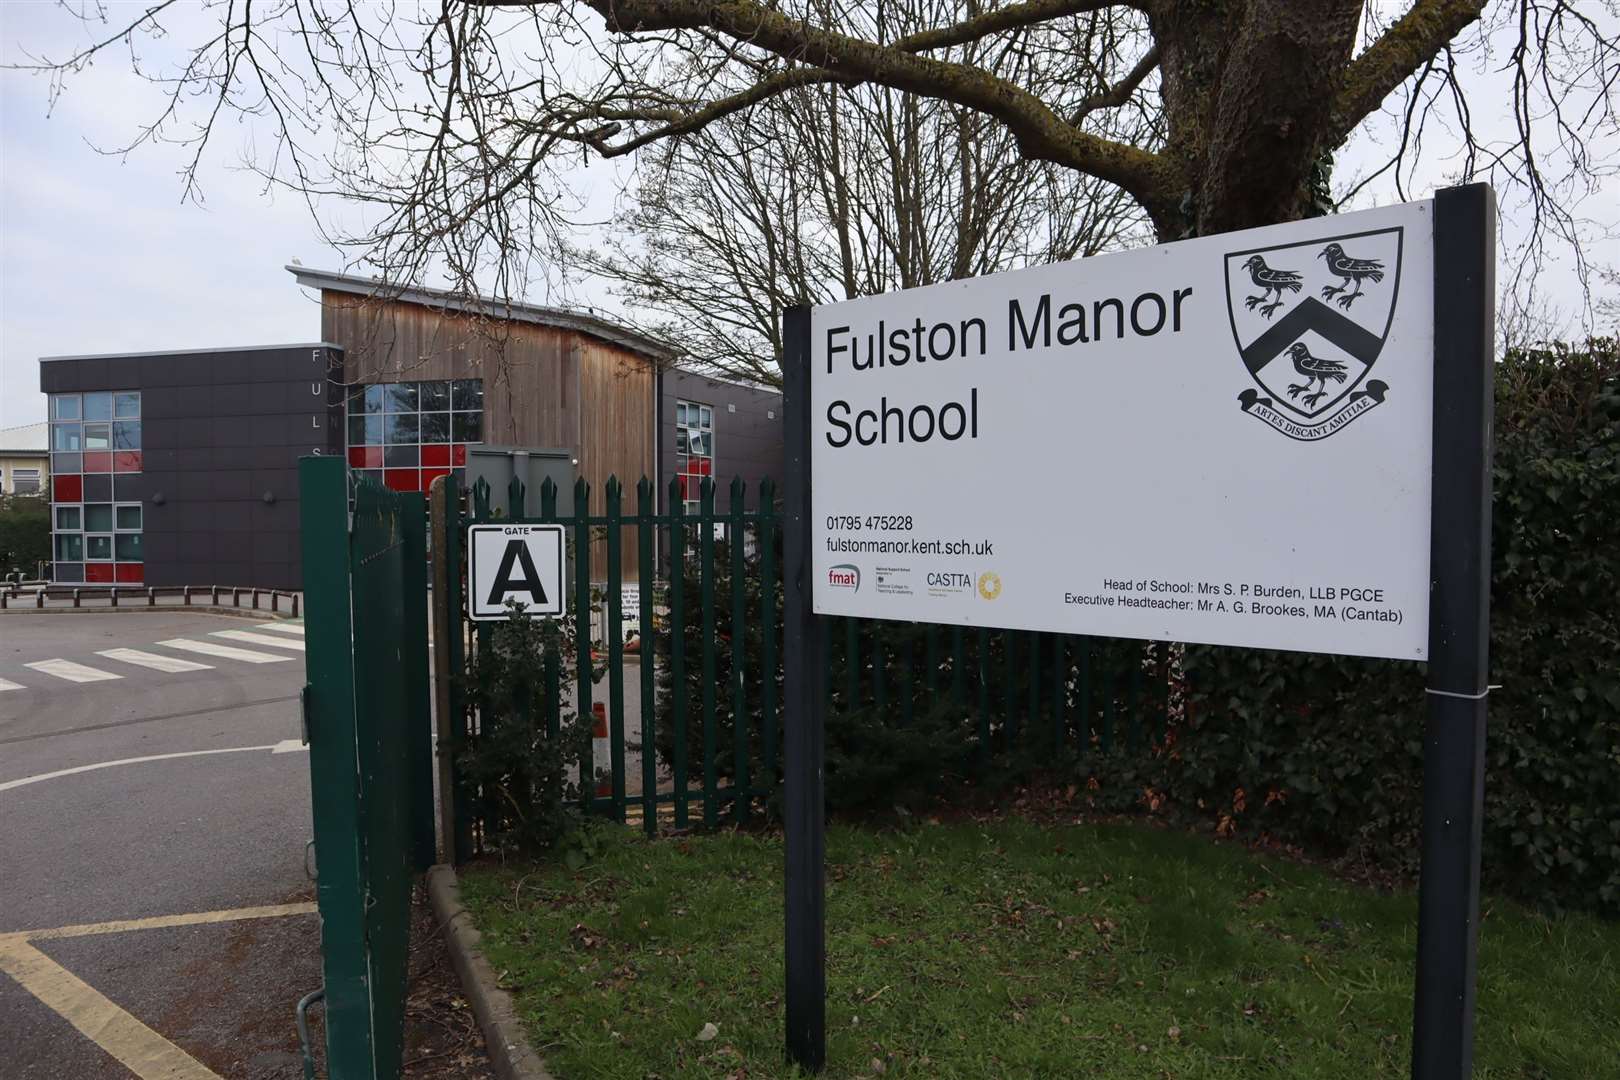 Fulston Manor School, Sittingbourne, front sign. Picture: John Nurden (53878290)